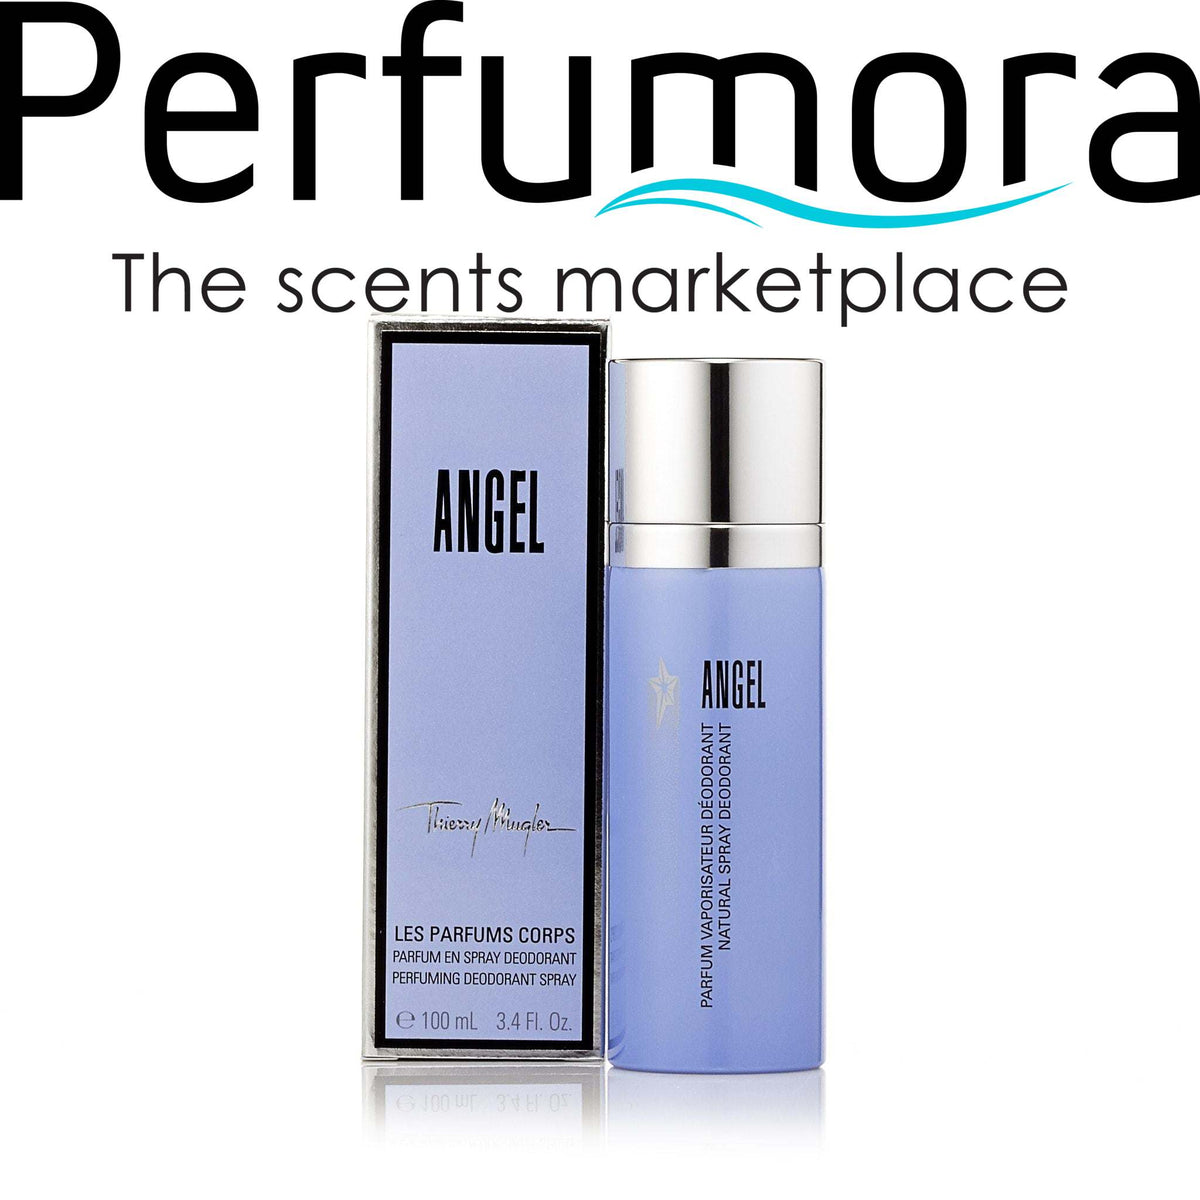 Angel Deodorant Spray for Women by Thierry Mugler 3.4 oz.